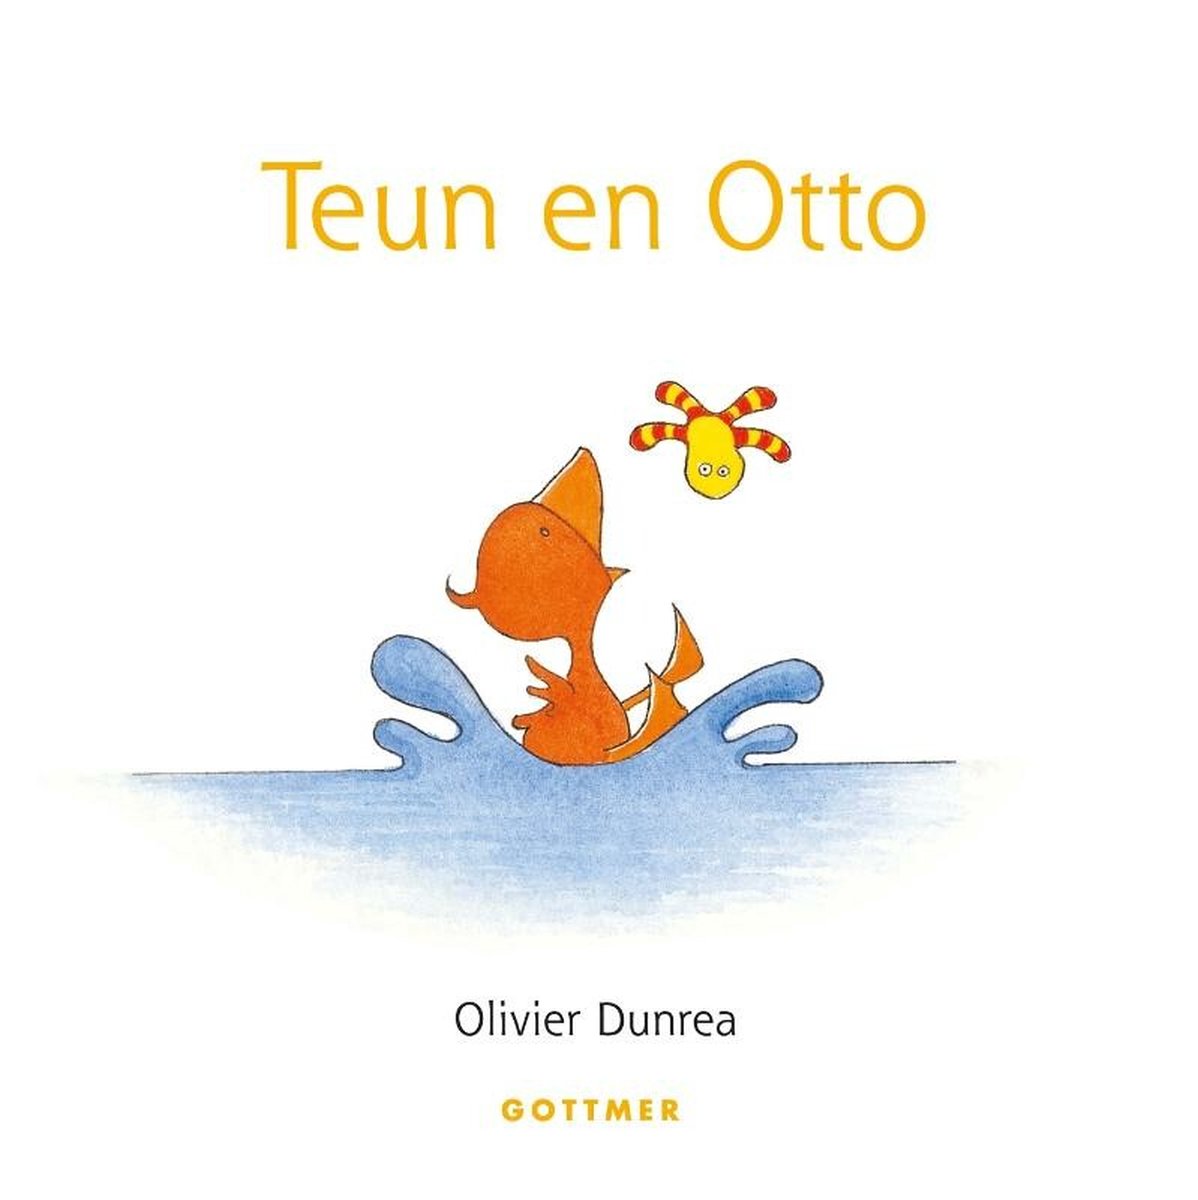 en Otto, Olivier Dunrea | 9789025776510 | Boeken | bol.com